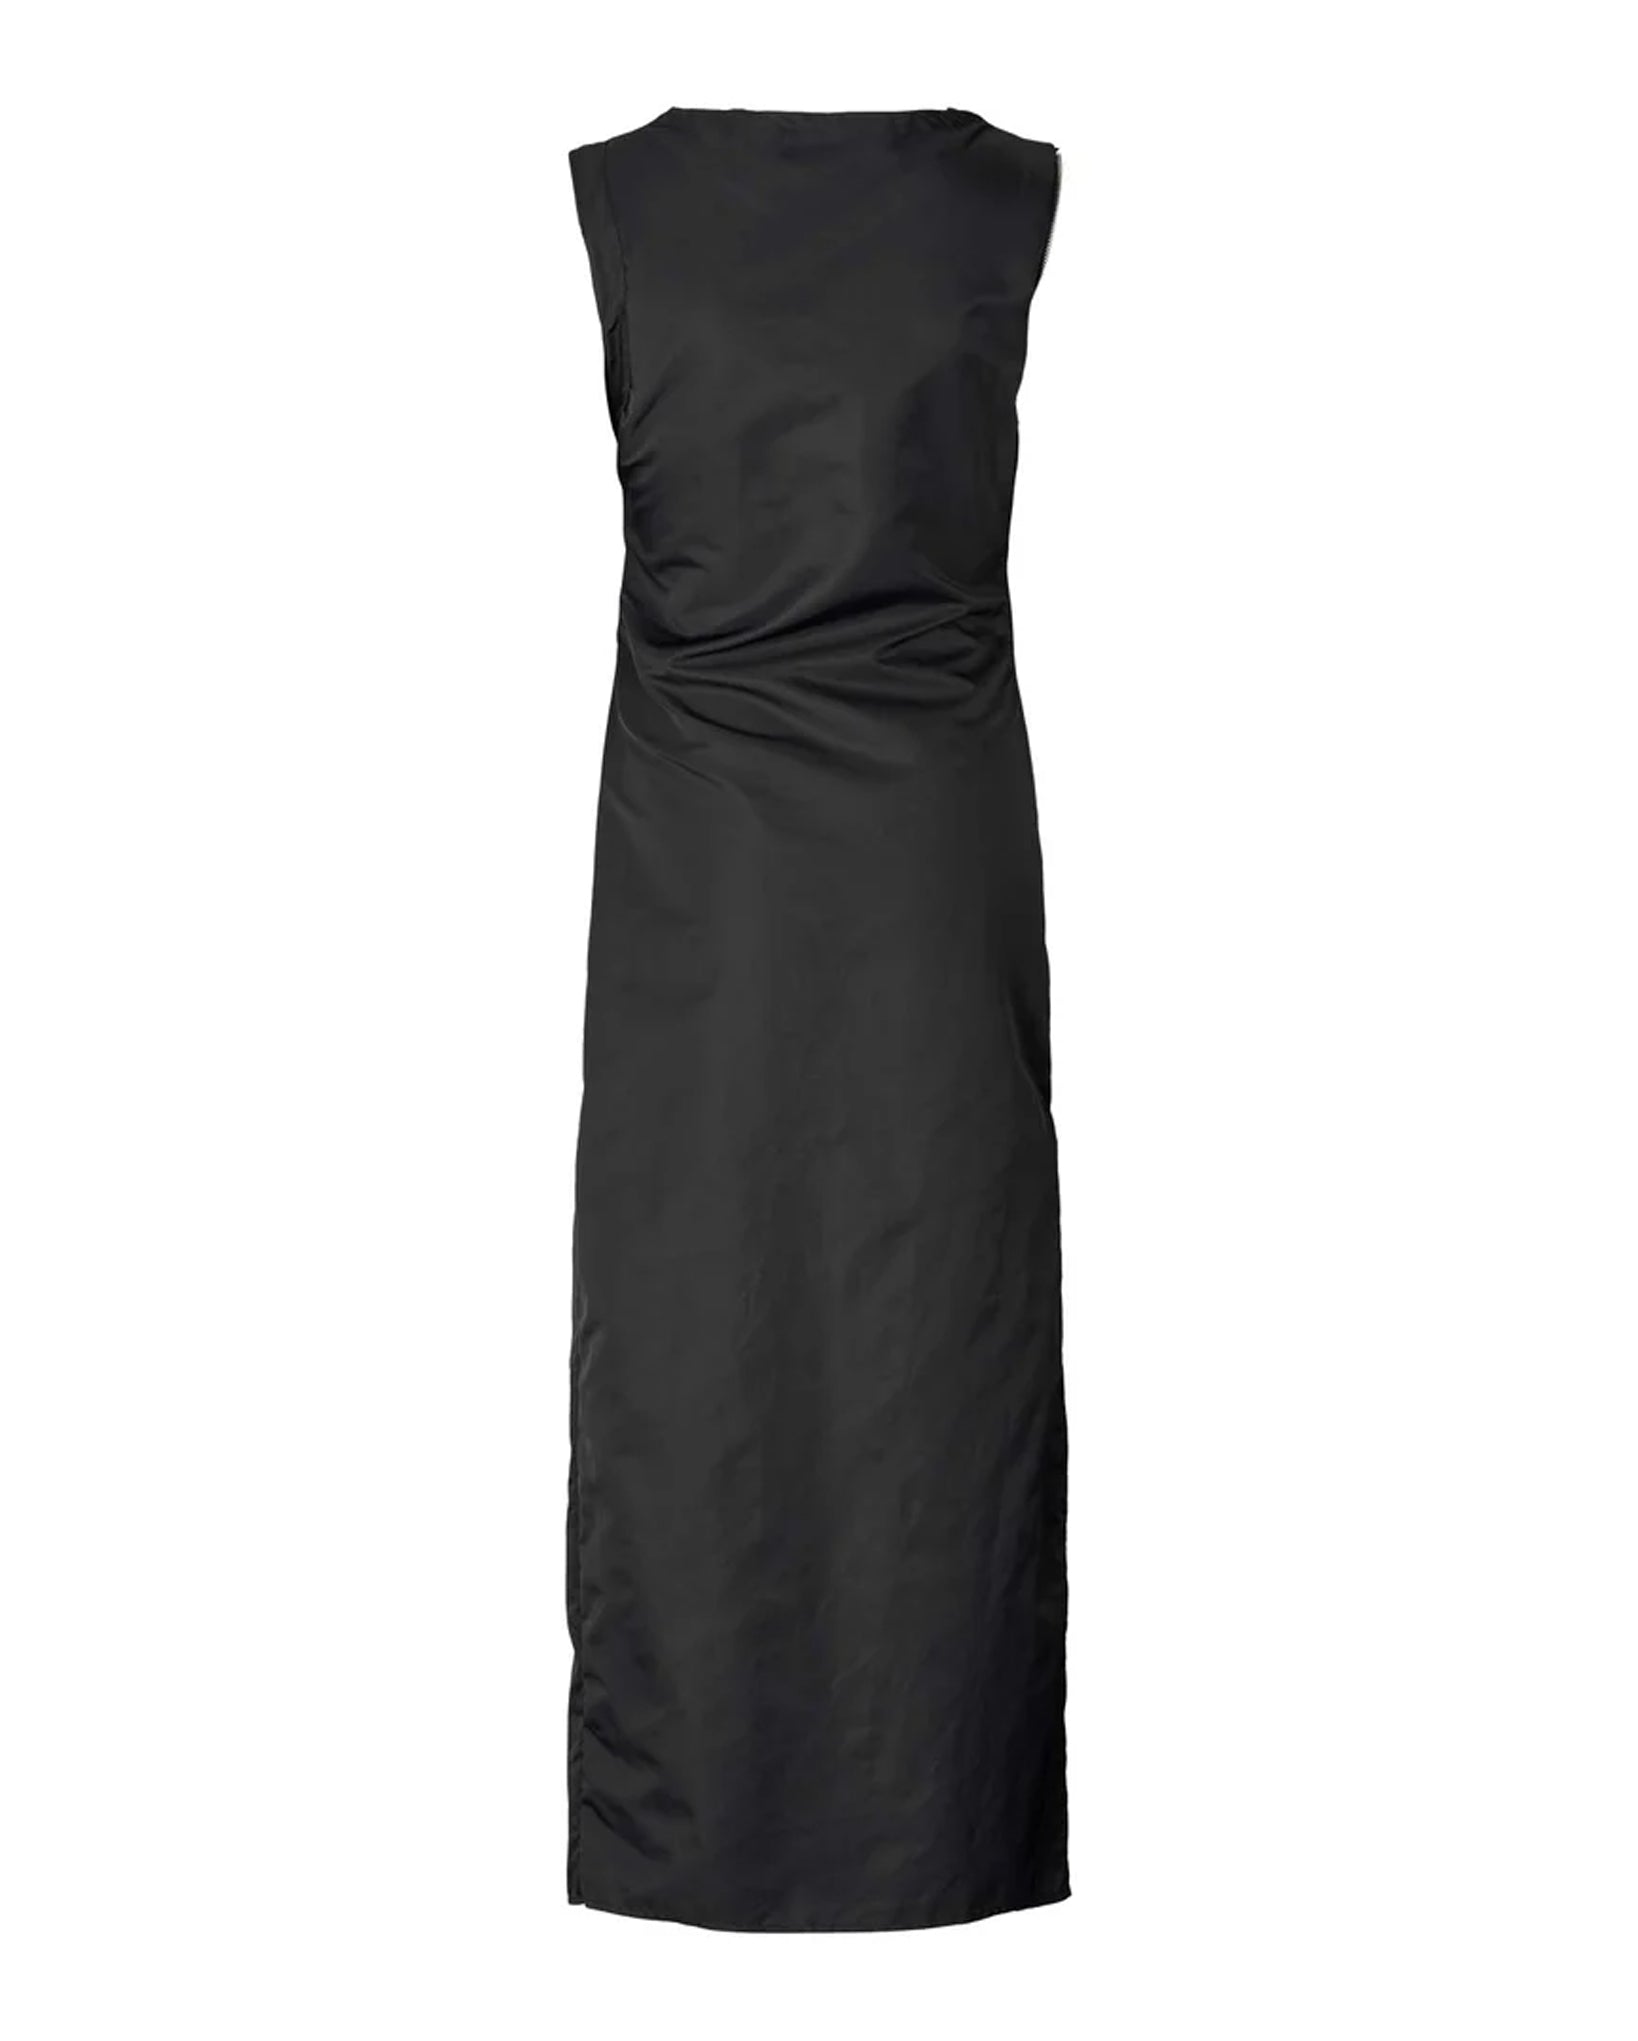 Alita Nylon Zipper Dress (Caviar Black)